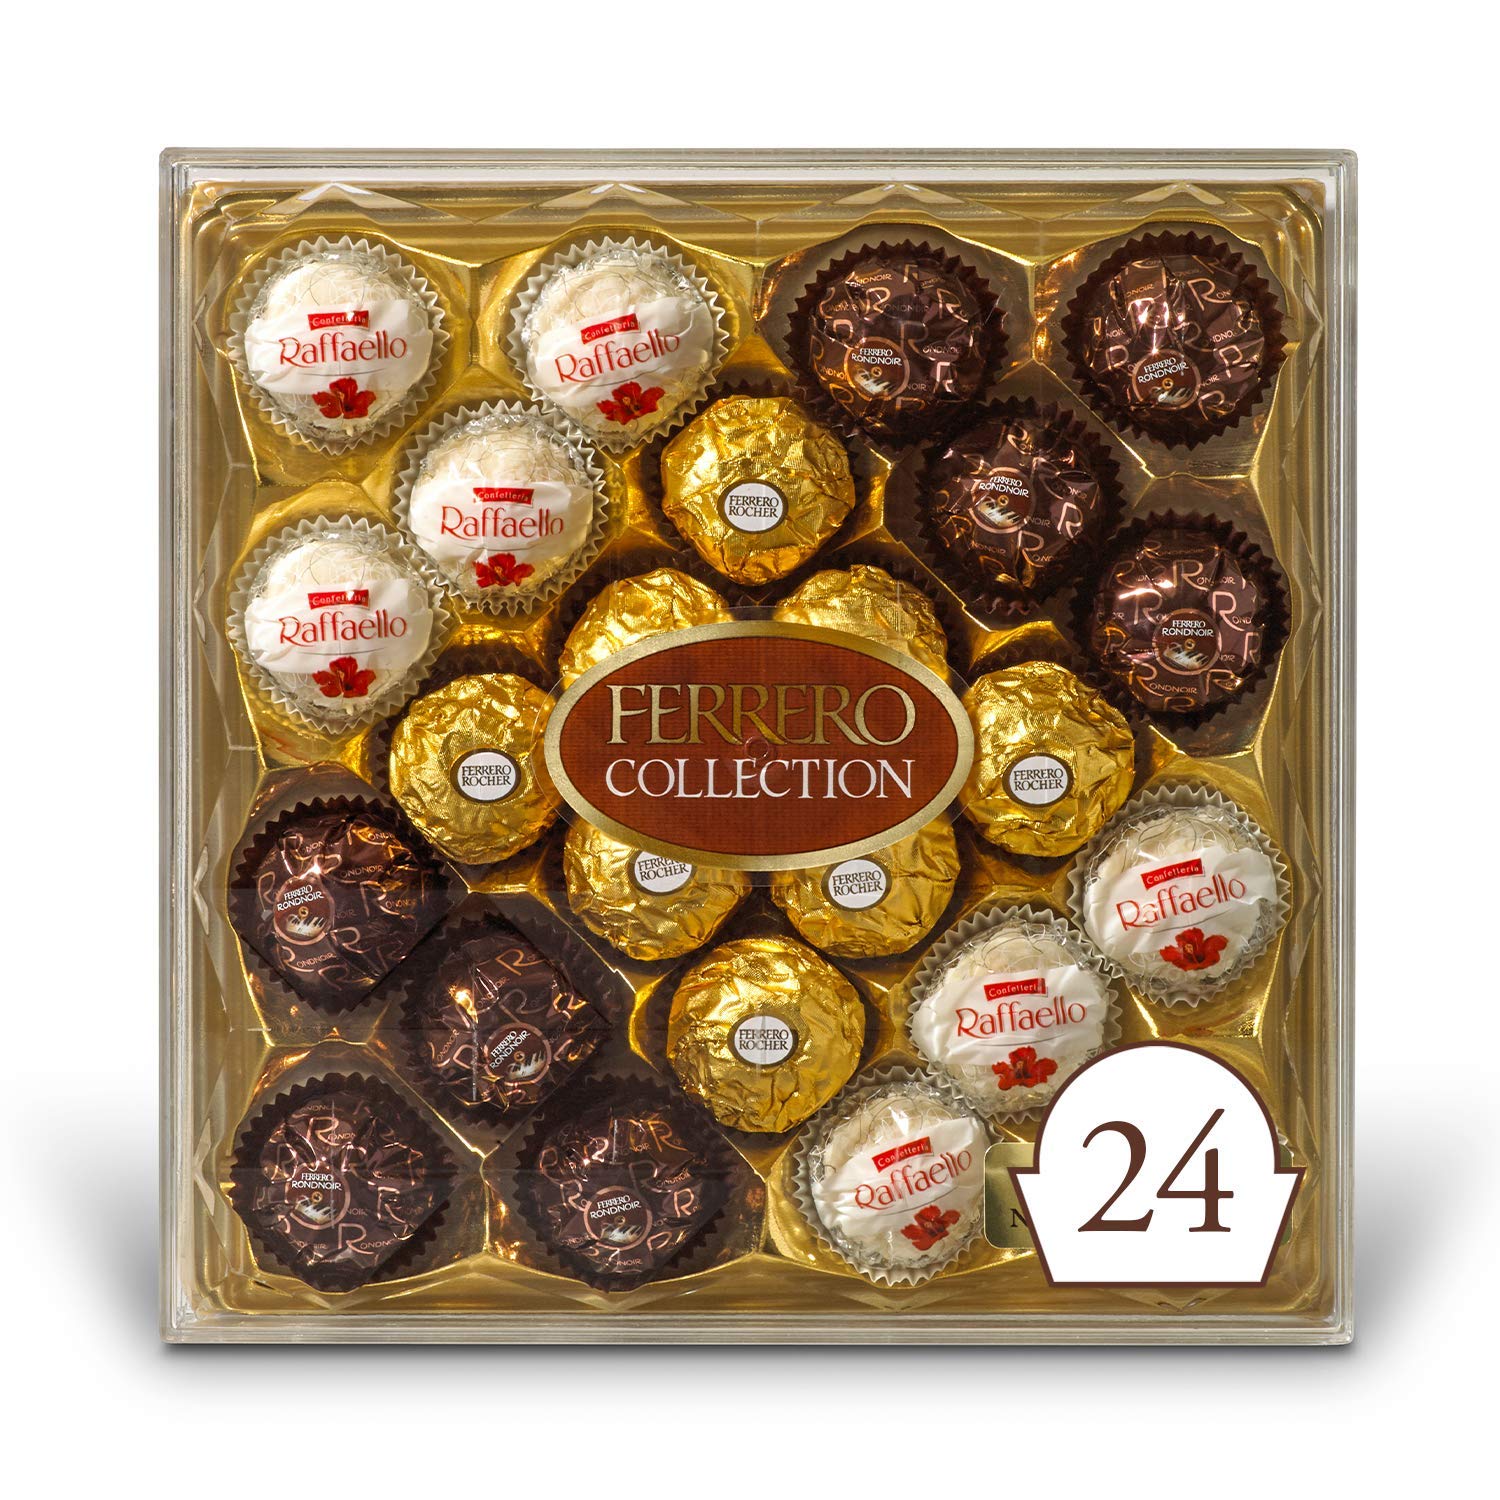 Ferrero Rocher chocolate easter eggs Collection